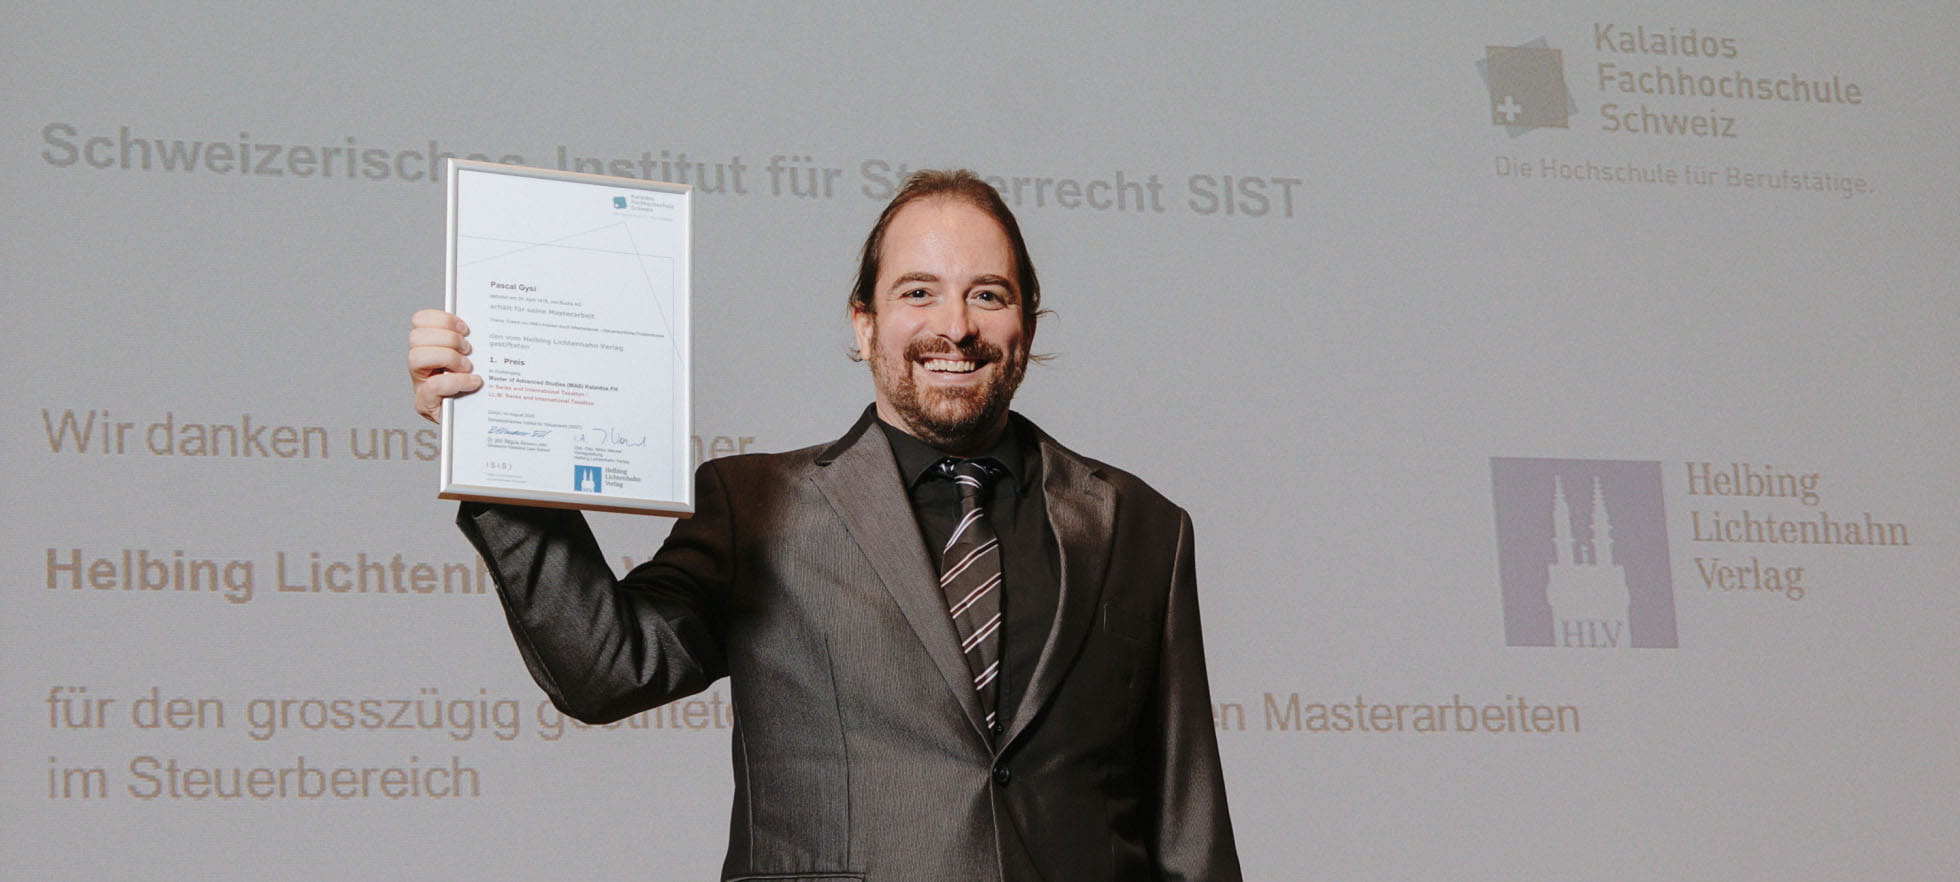 Preisträger 2020 Helbing Lichtenhahn Verlag: Pascal Gysi